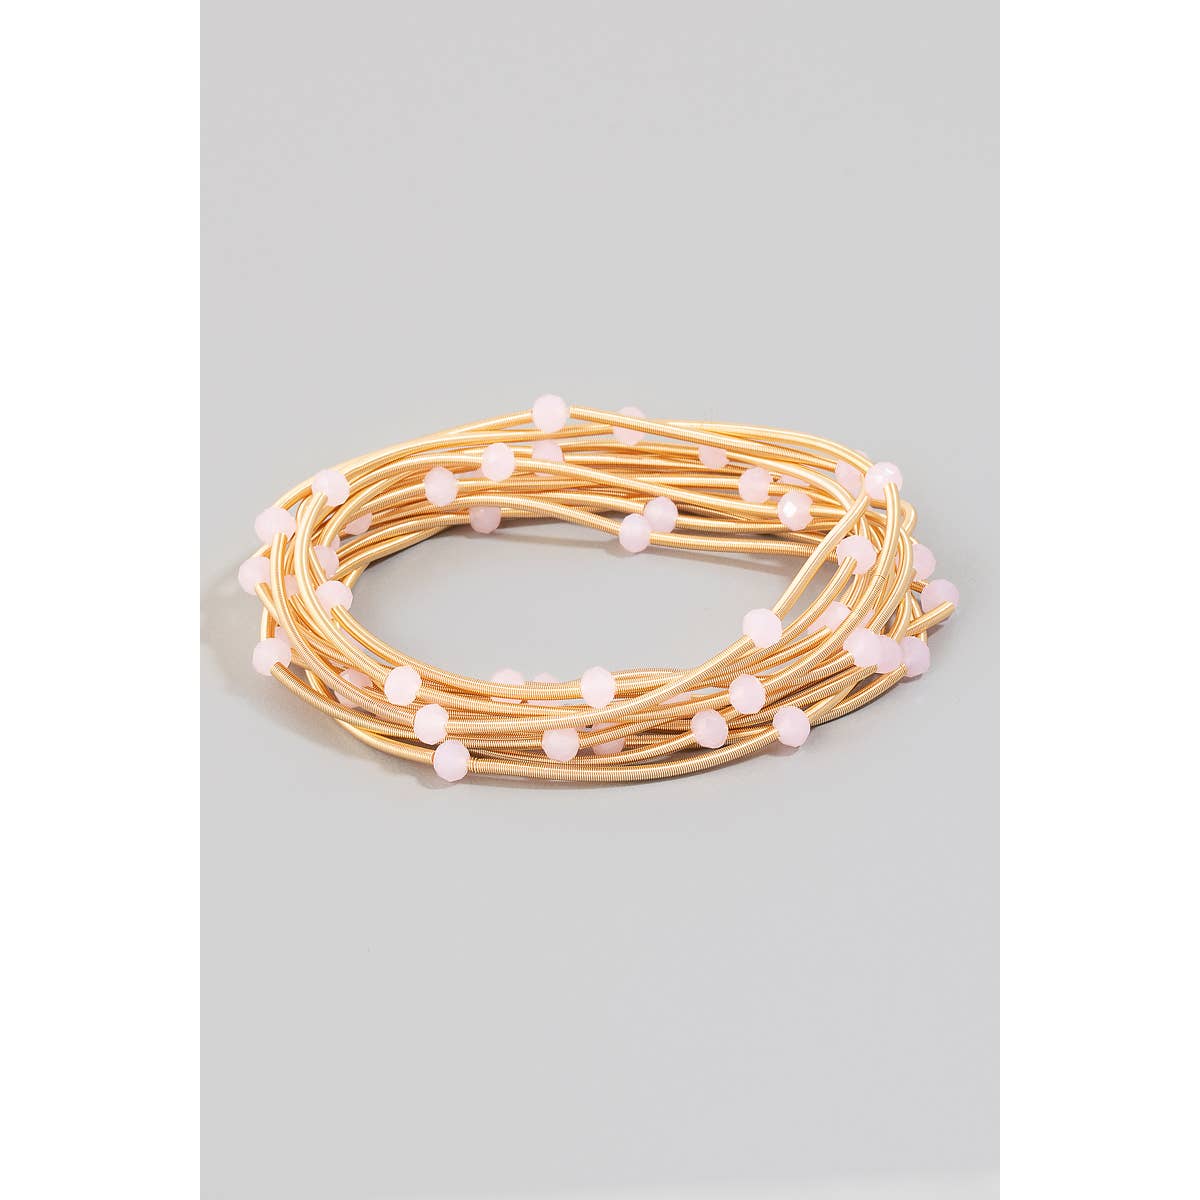 Rhinestone Beads And Coils Bracelet Set: Mint